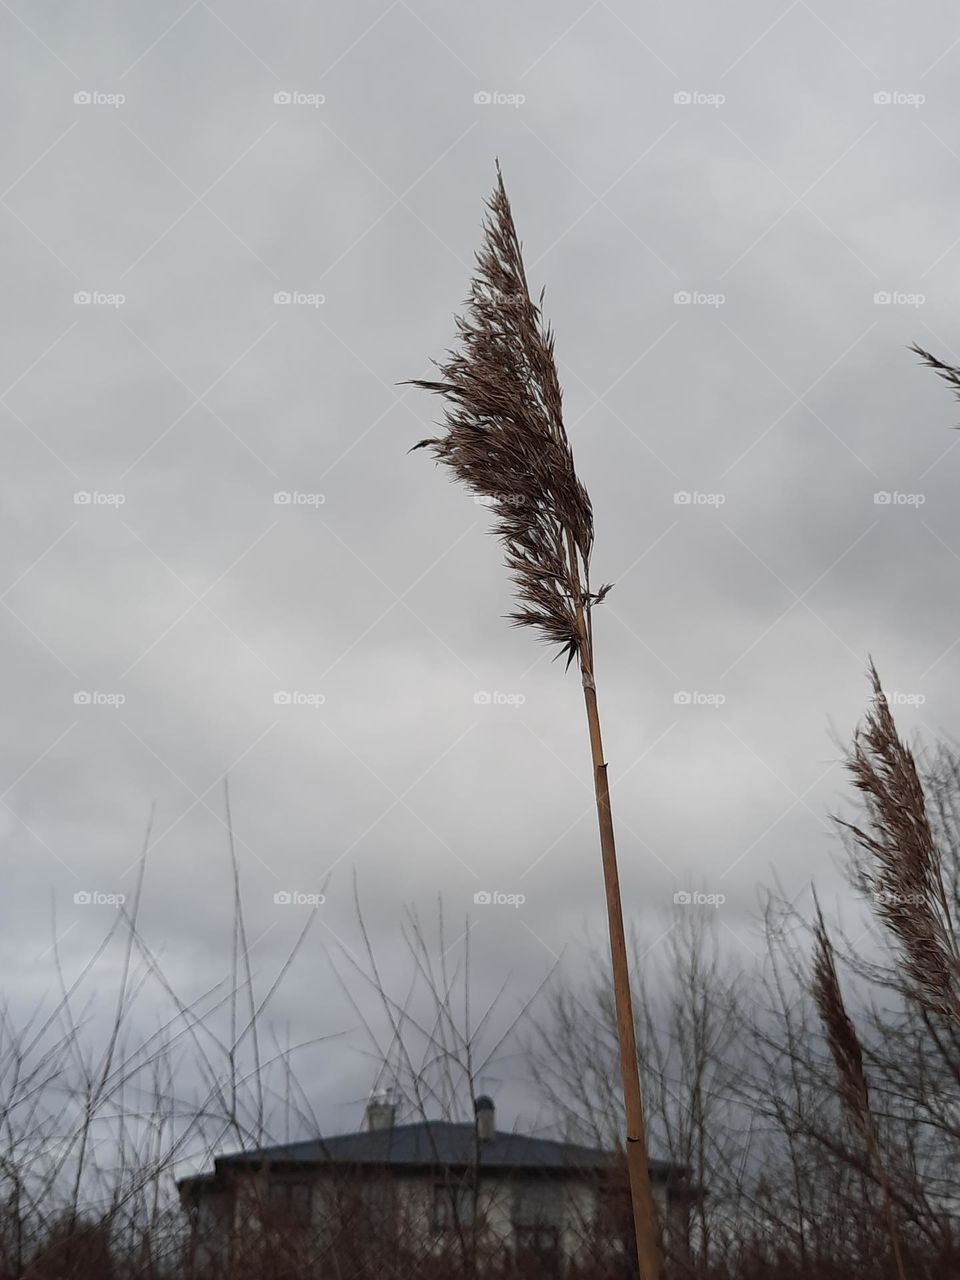 reeds against gray sky